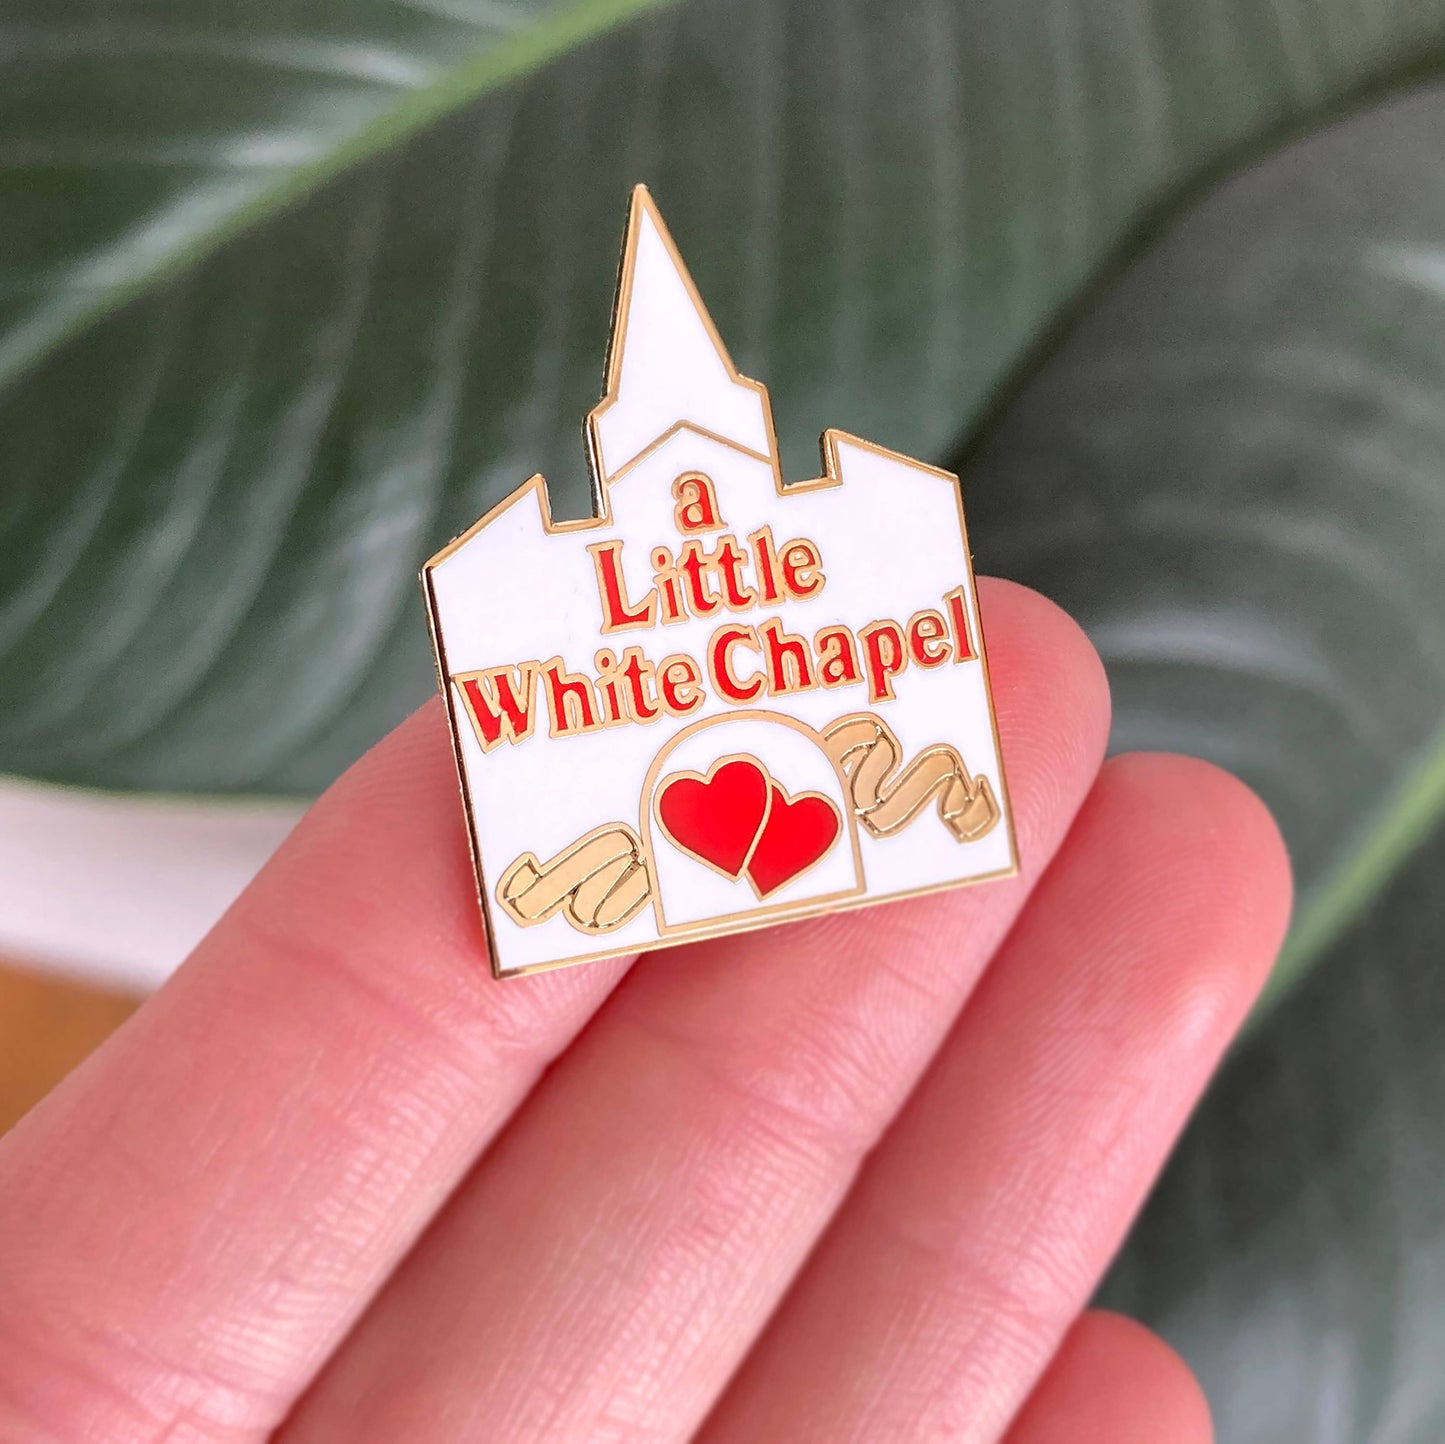 A Little White Chapel